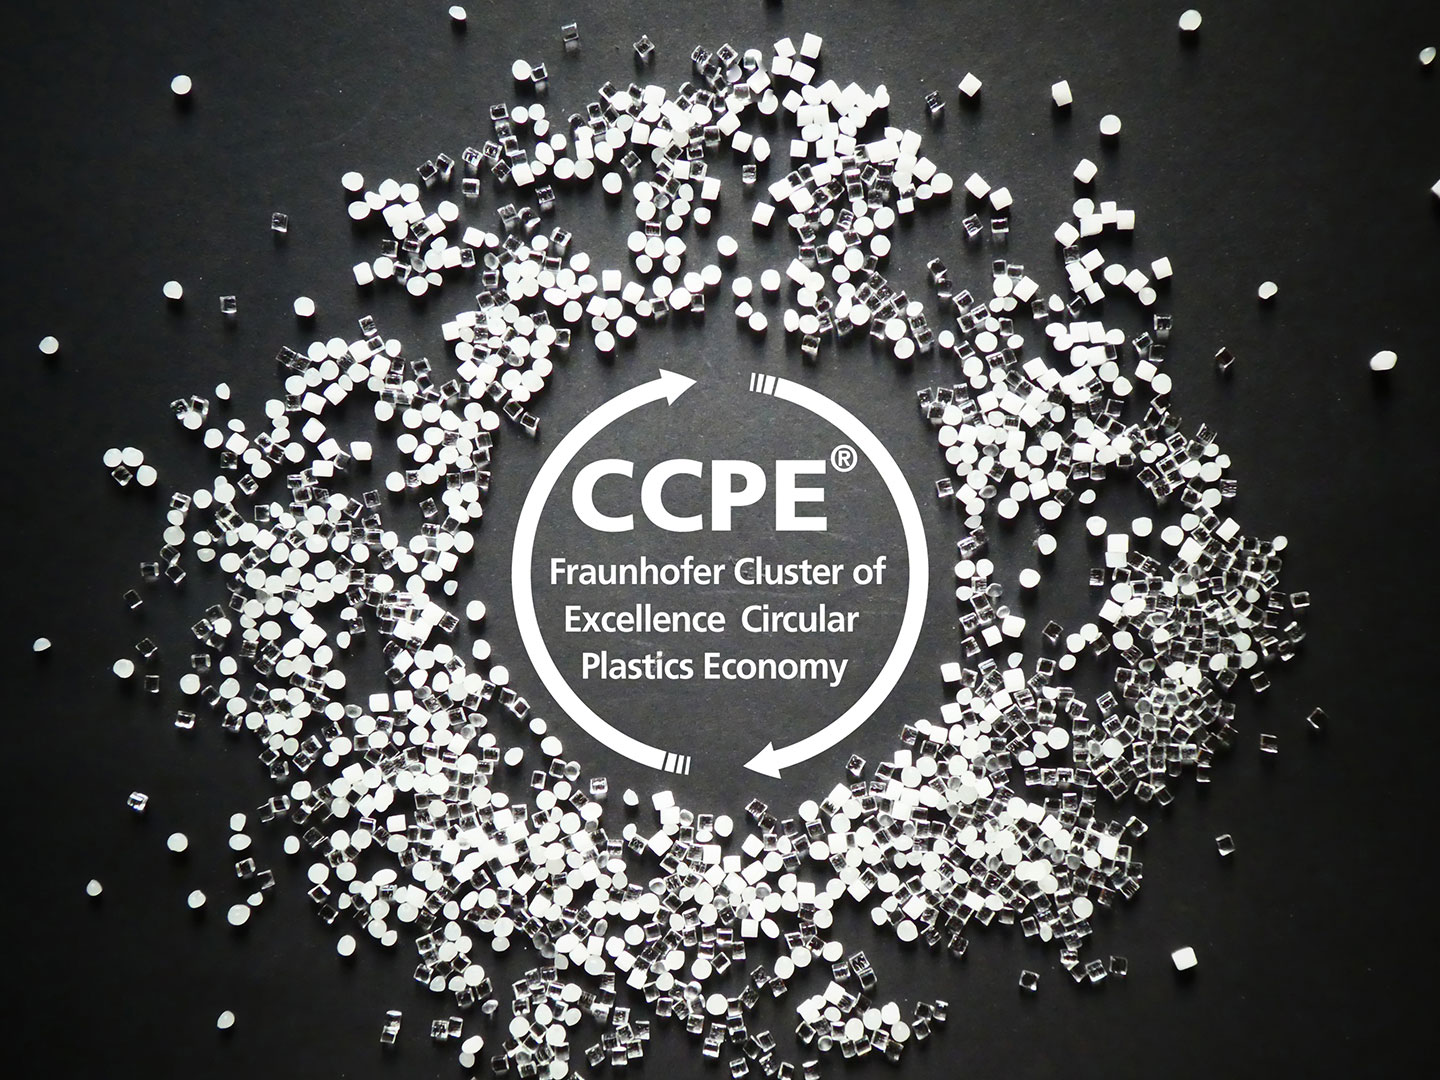 Fraunhofer Cluster of Excellence »Circular Plastics Economy CCPE®